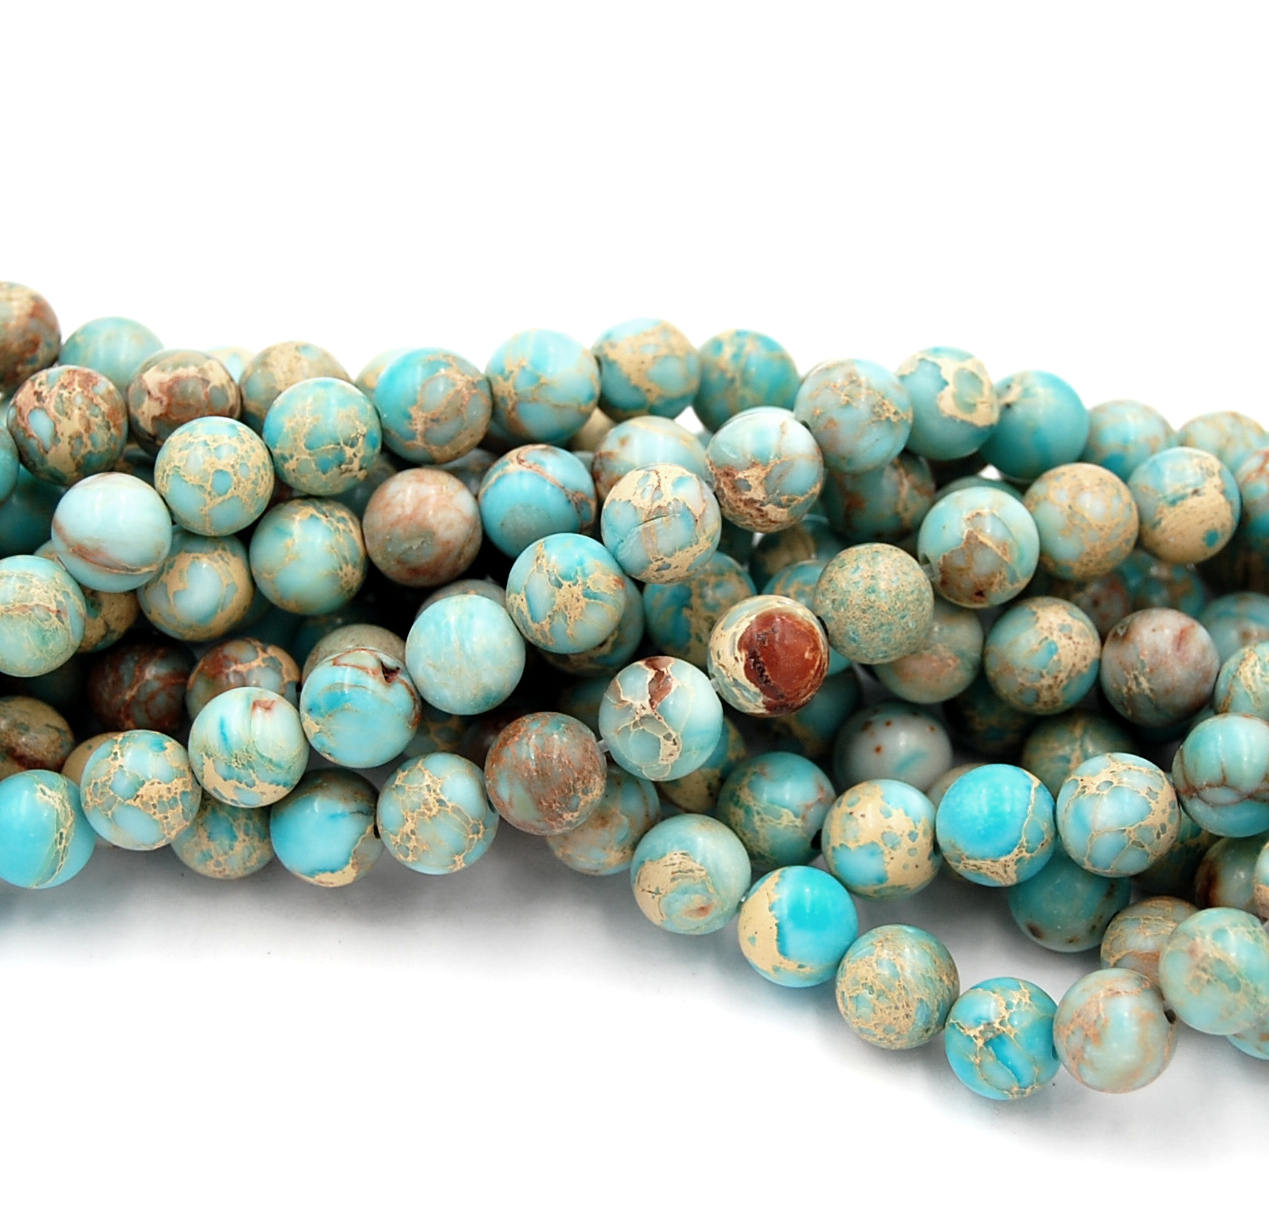 Pale Blue Turquoise Impression Jasper Beads 8mm round -15.5 beads